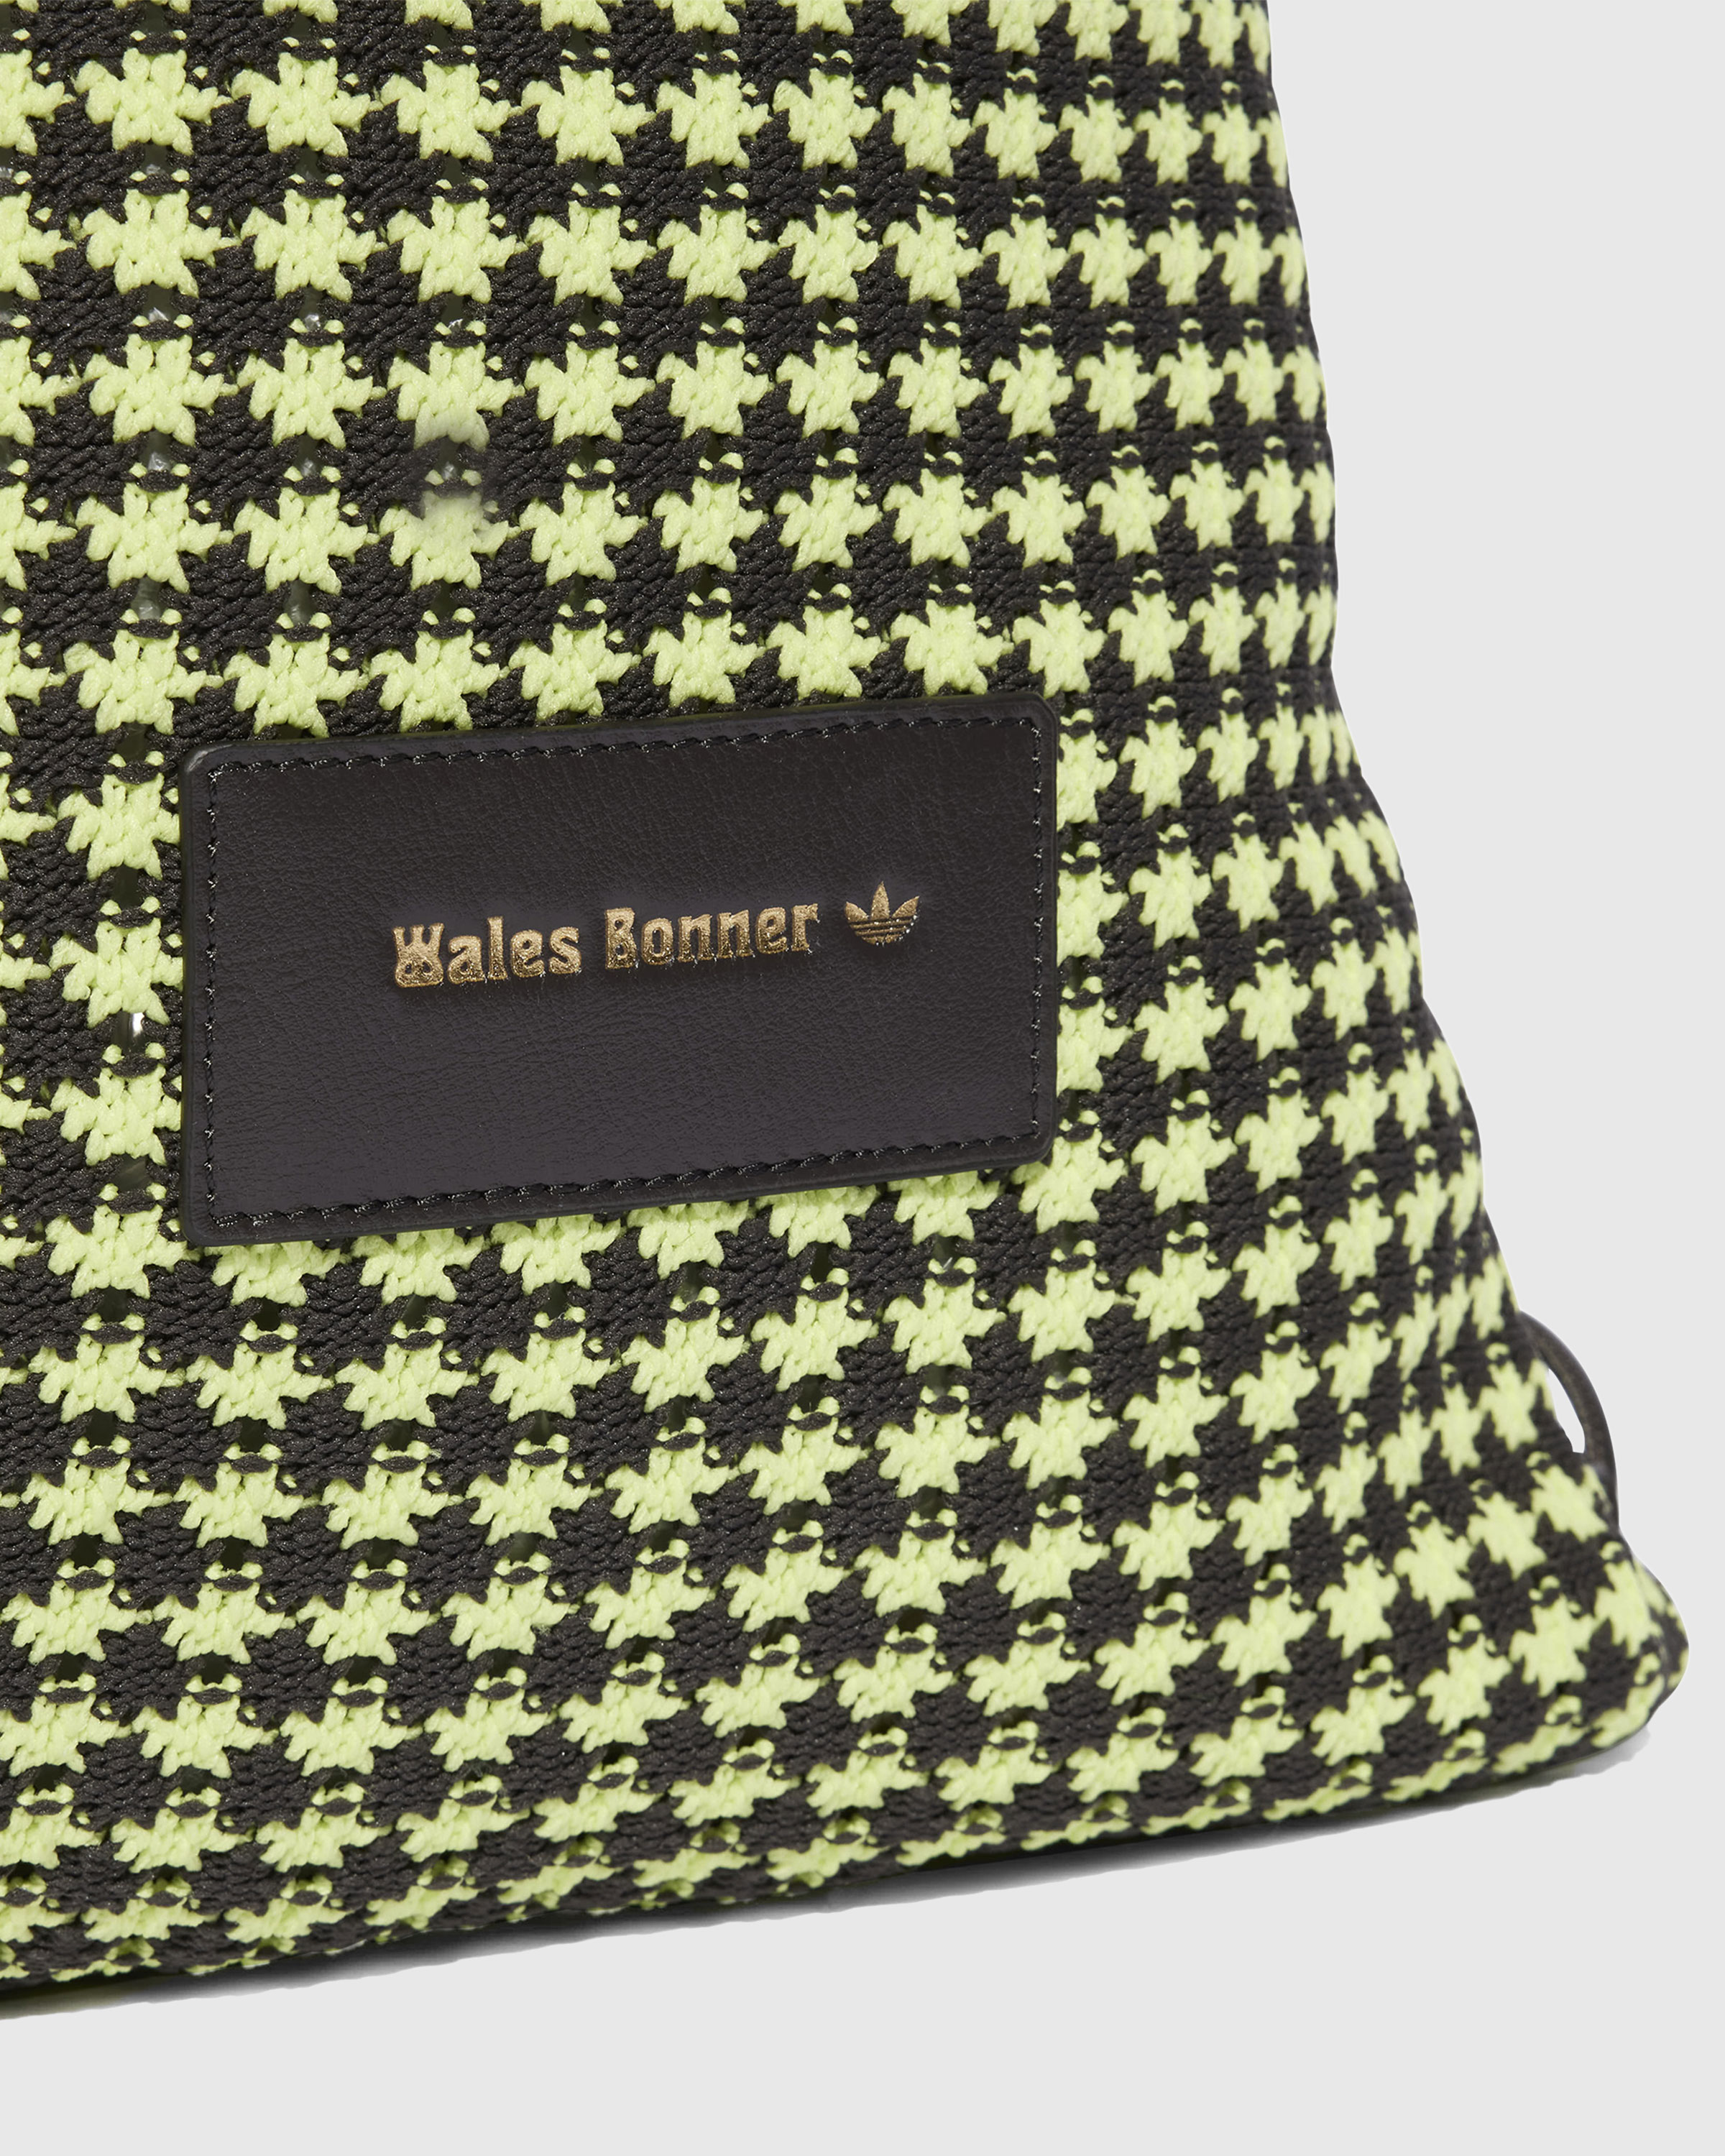 Adidas x Wales Bonner – Crochet Bag Semi Frozen Yellow/Night Brown - Shoulder Bags - Yellow - Image 4